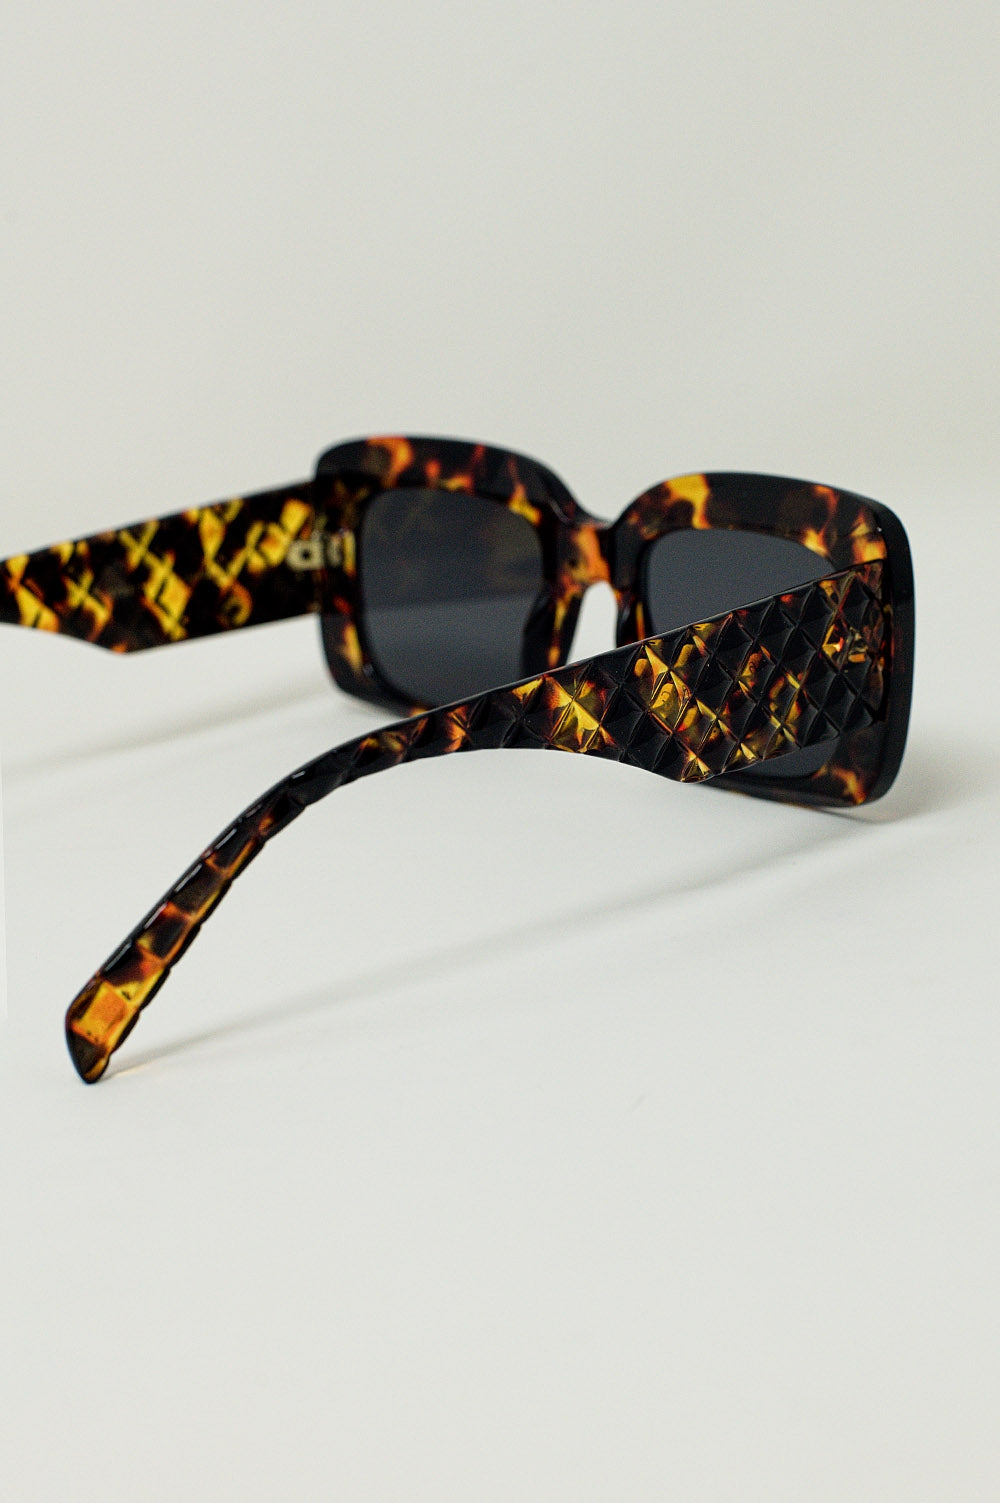 Oversized Rectangular Sunglasses in vintage Tortoise Shell - Szua Store